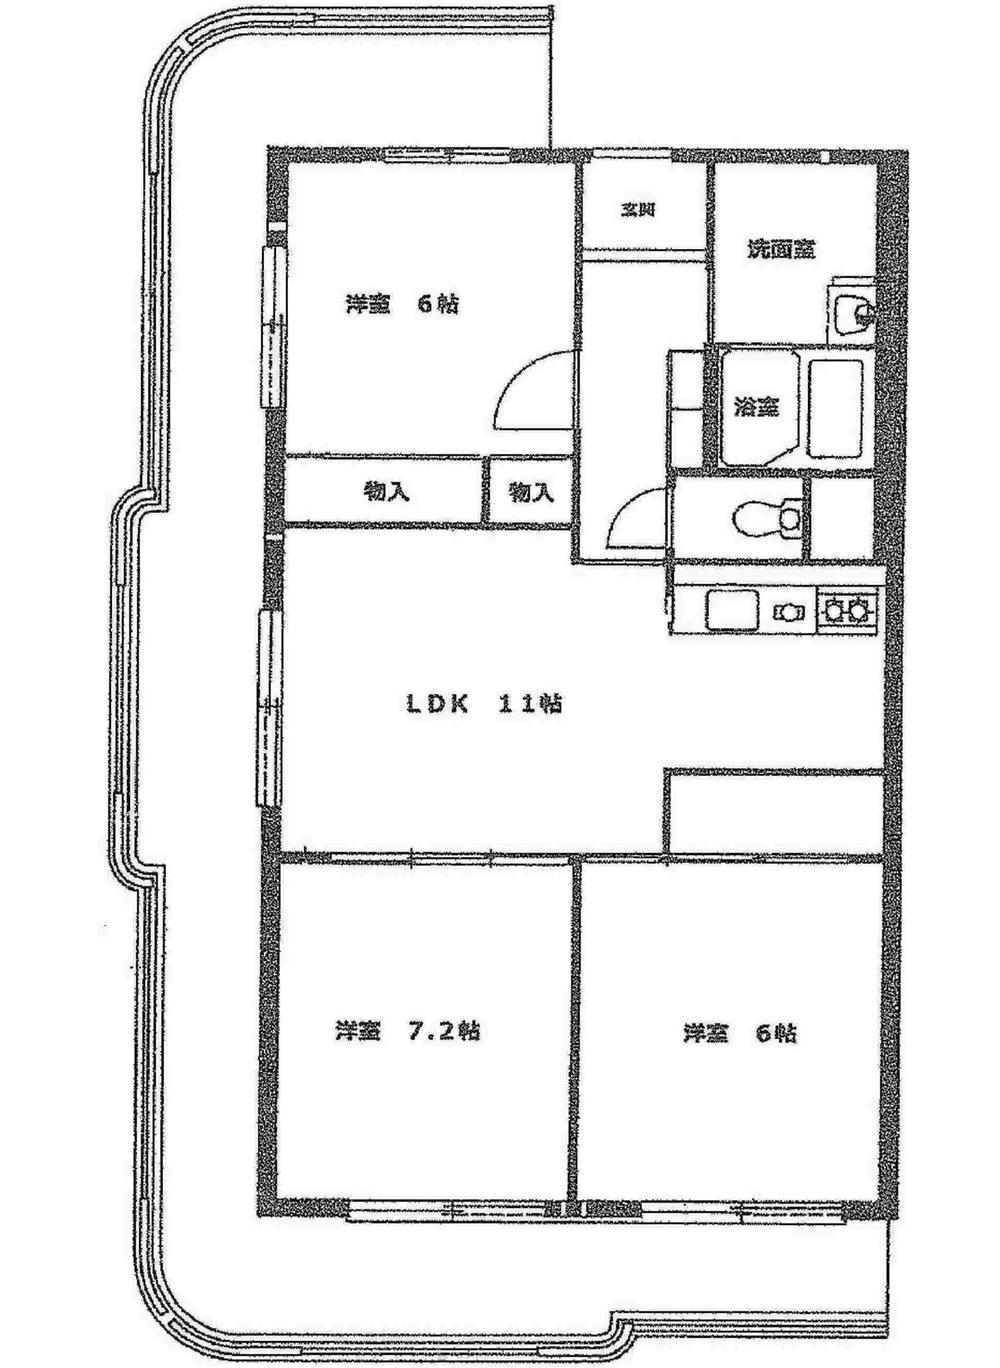 Floor plan. 3LDK, Price 9.8 million yen, Footprint 70.4 sq m , Balcony area 30.4 sq m   ☆ Spacious balcony